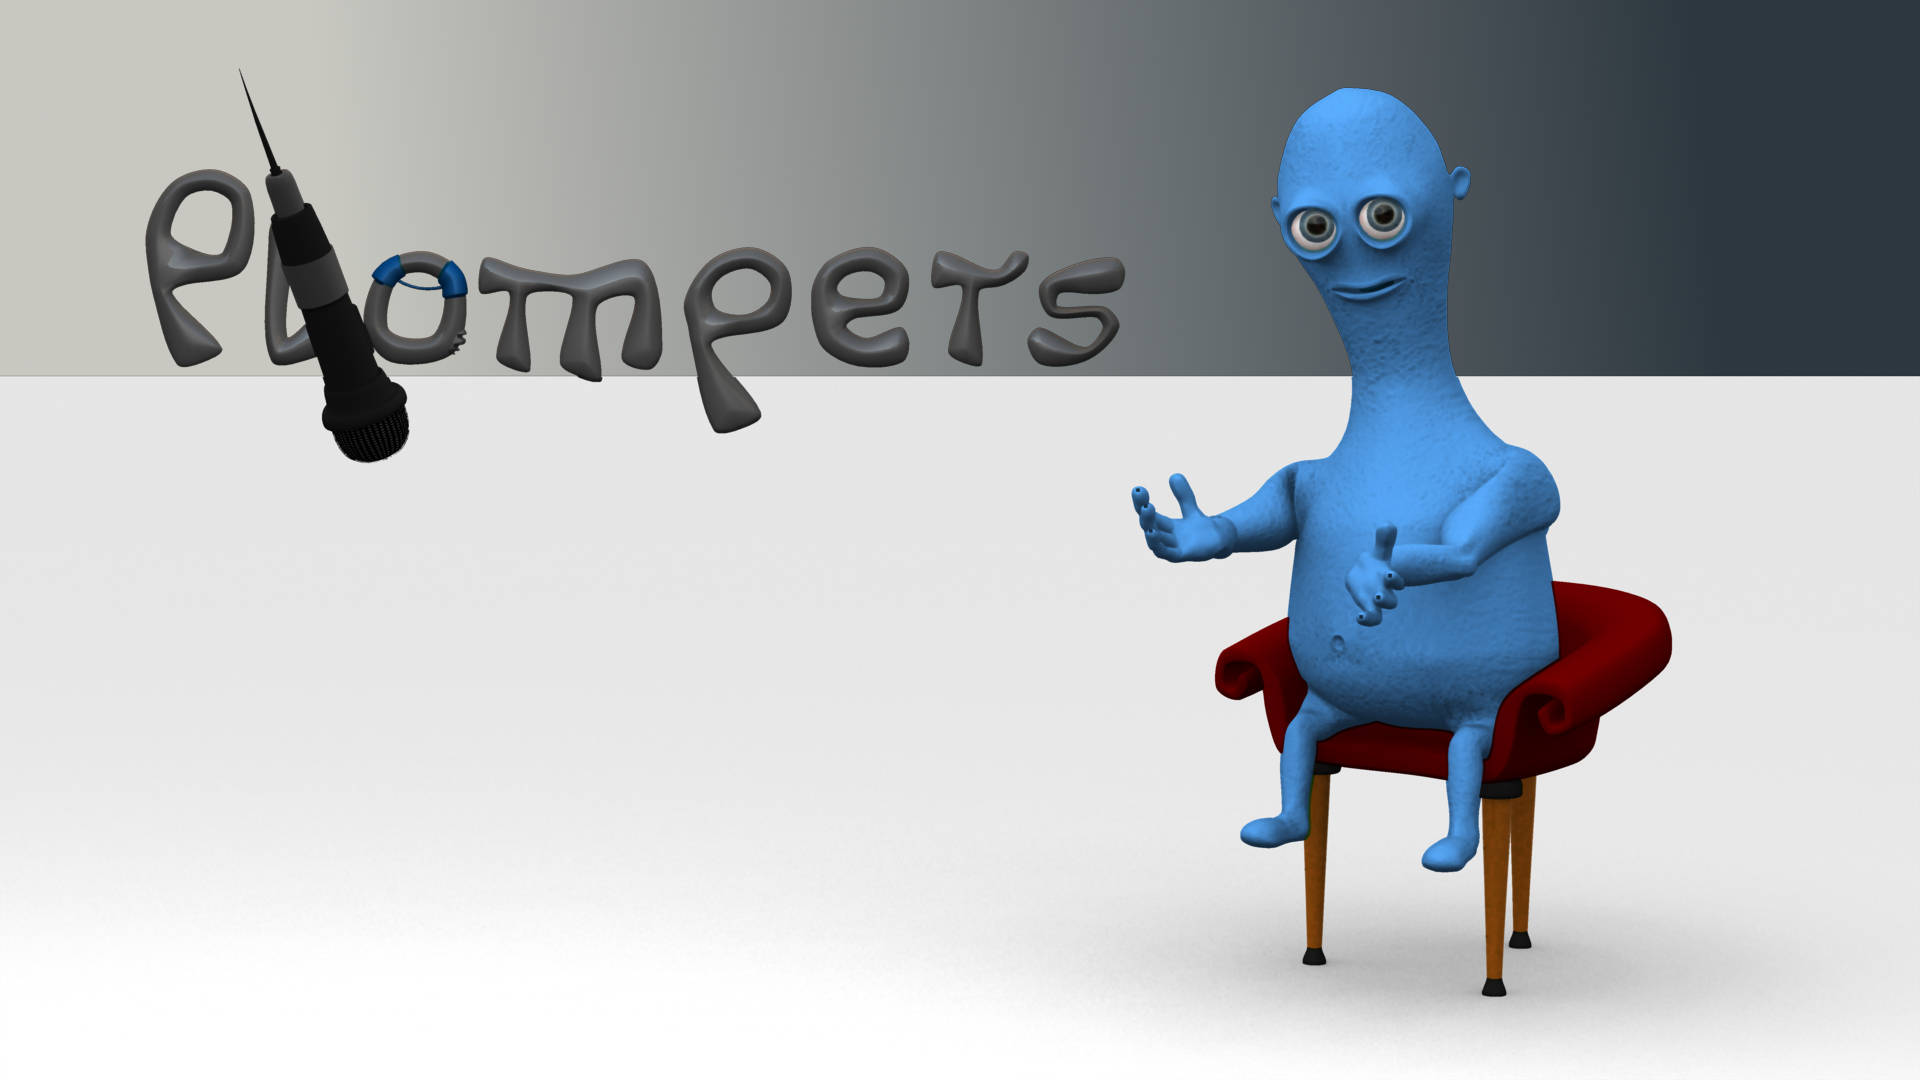 Animation:Master Plompers, little blue Monster